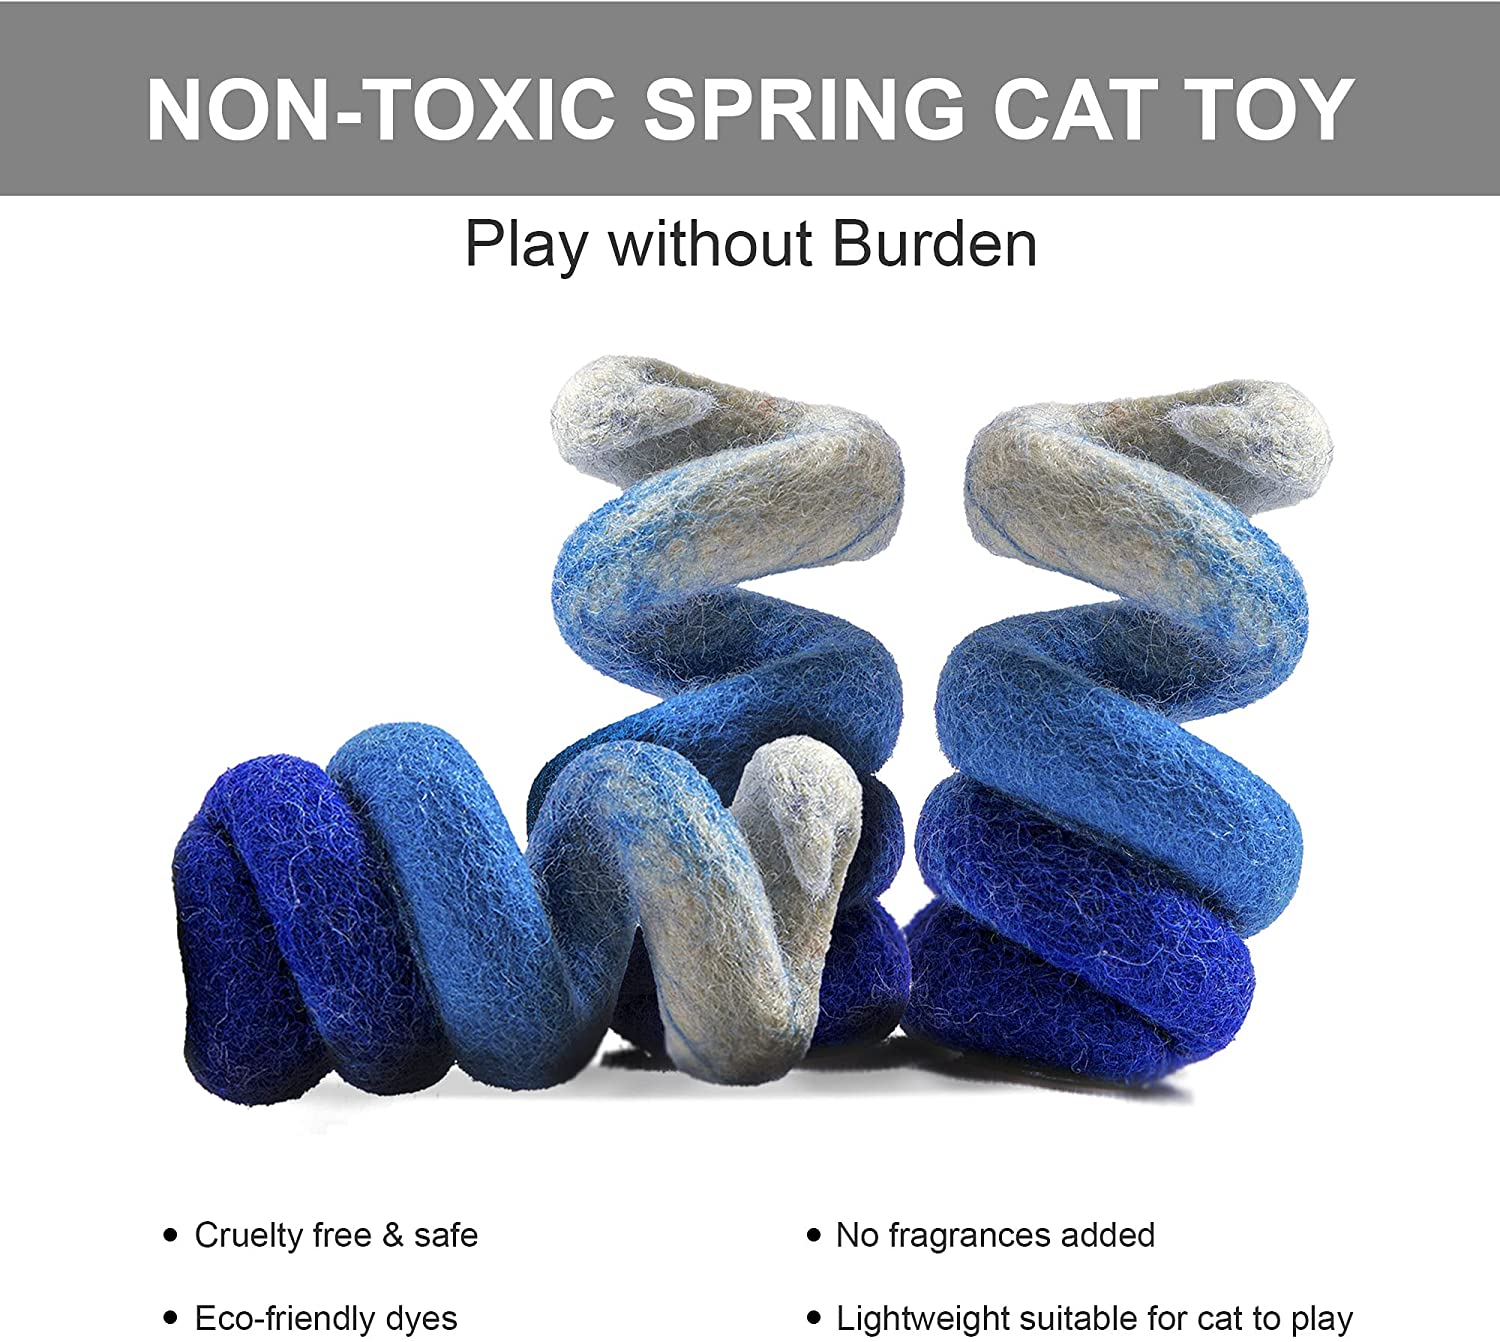 Eco Friendly Wool Pet Toys